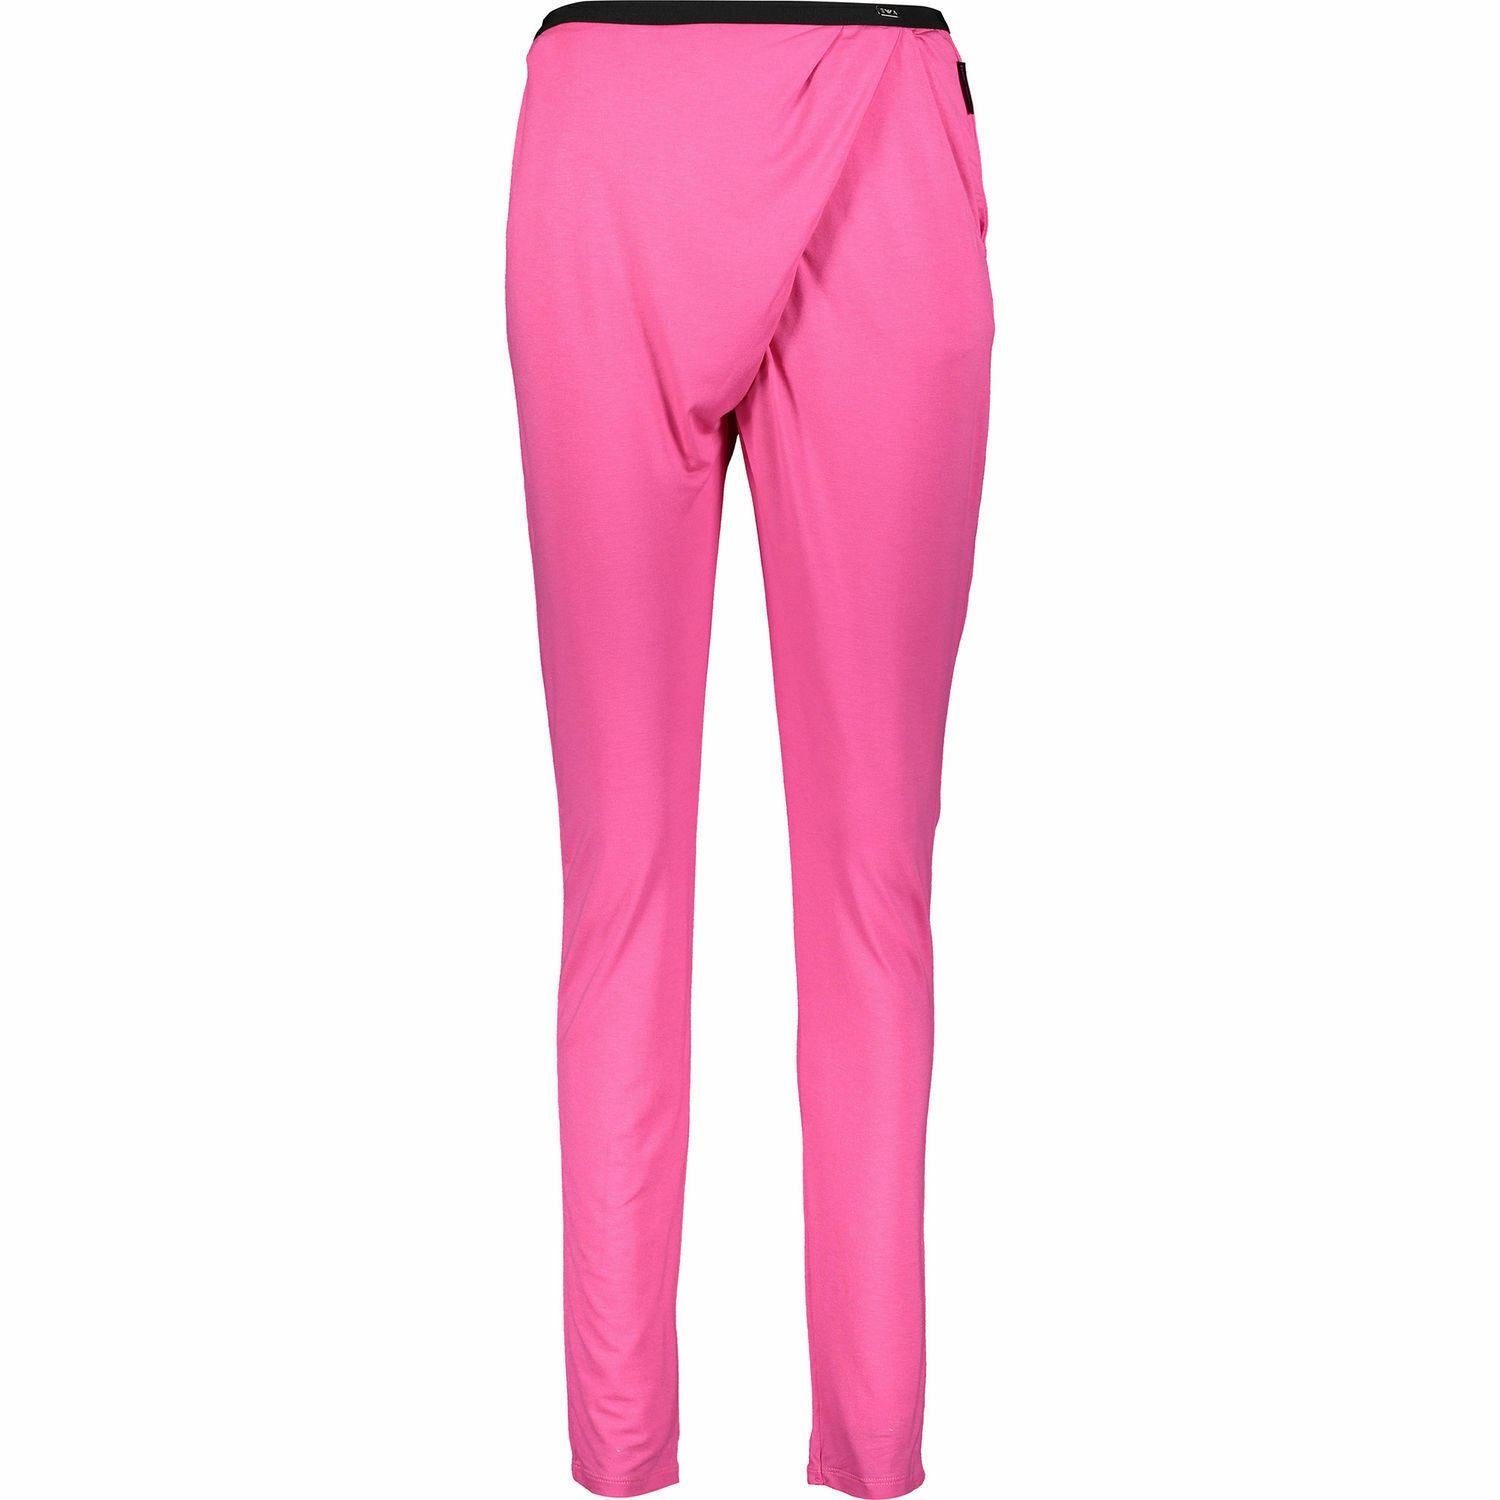 EMPORIO ARMANI Women's Hot Pink Swimwear Trousers size XS /size M /size XL